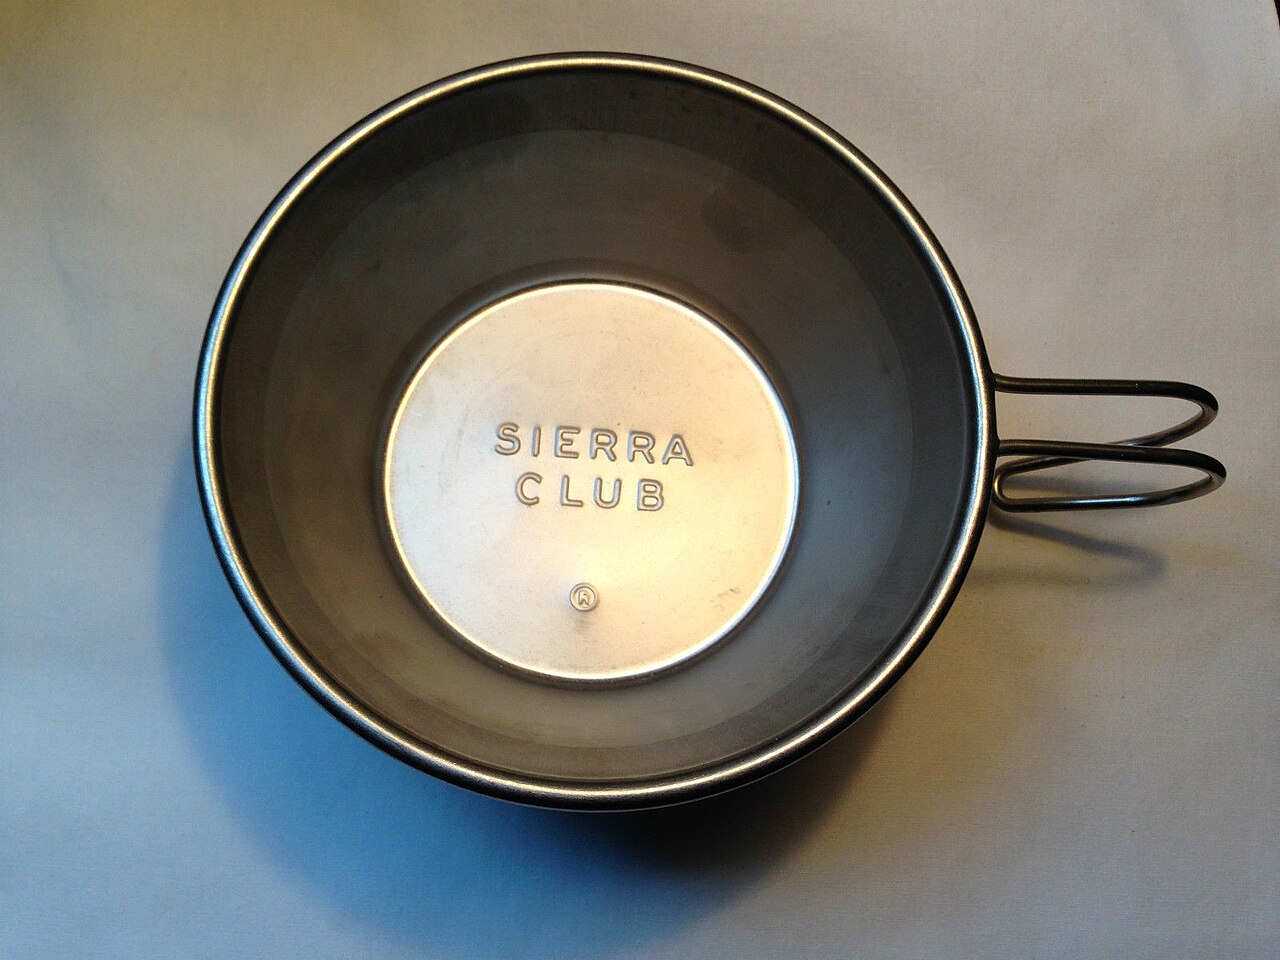 https://upload.wikimedia.org/wikipedia/commons/thumb/9/90/Sierra_Cup.JPG/1280px-Sierra_Cup.JPG